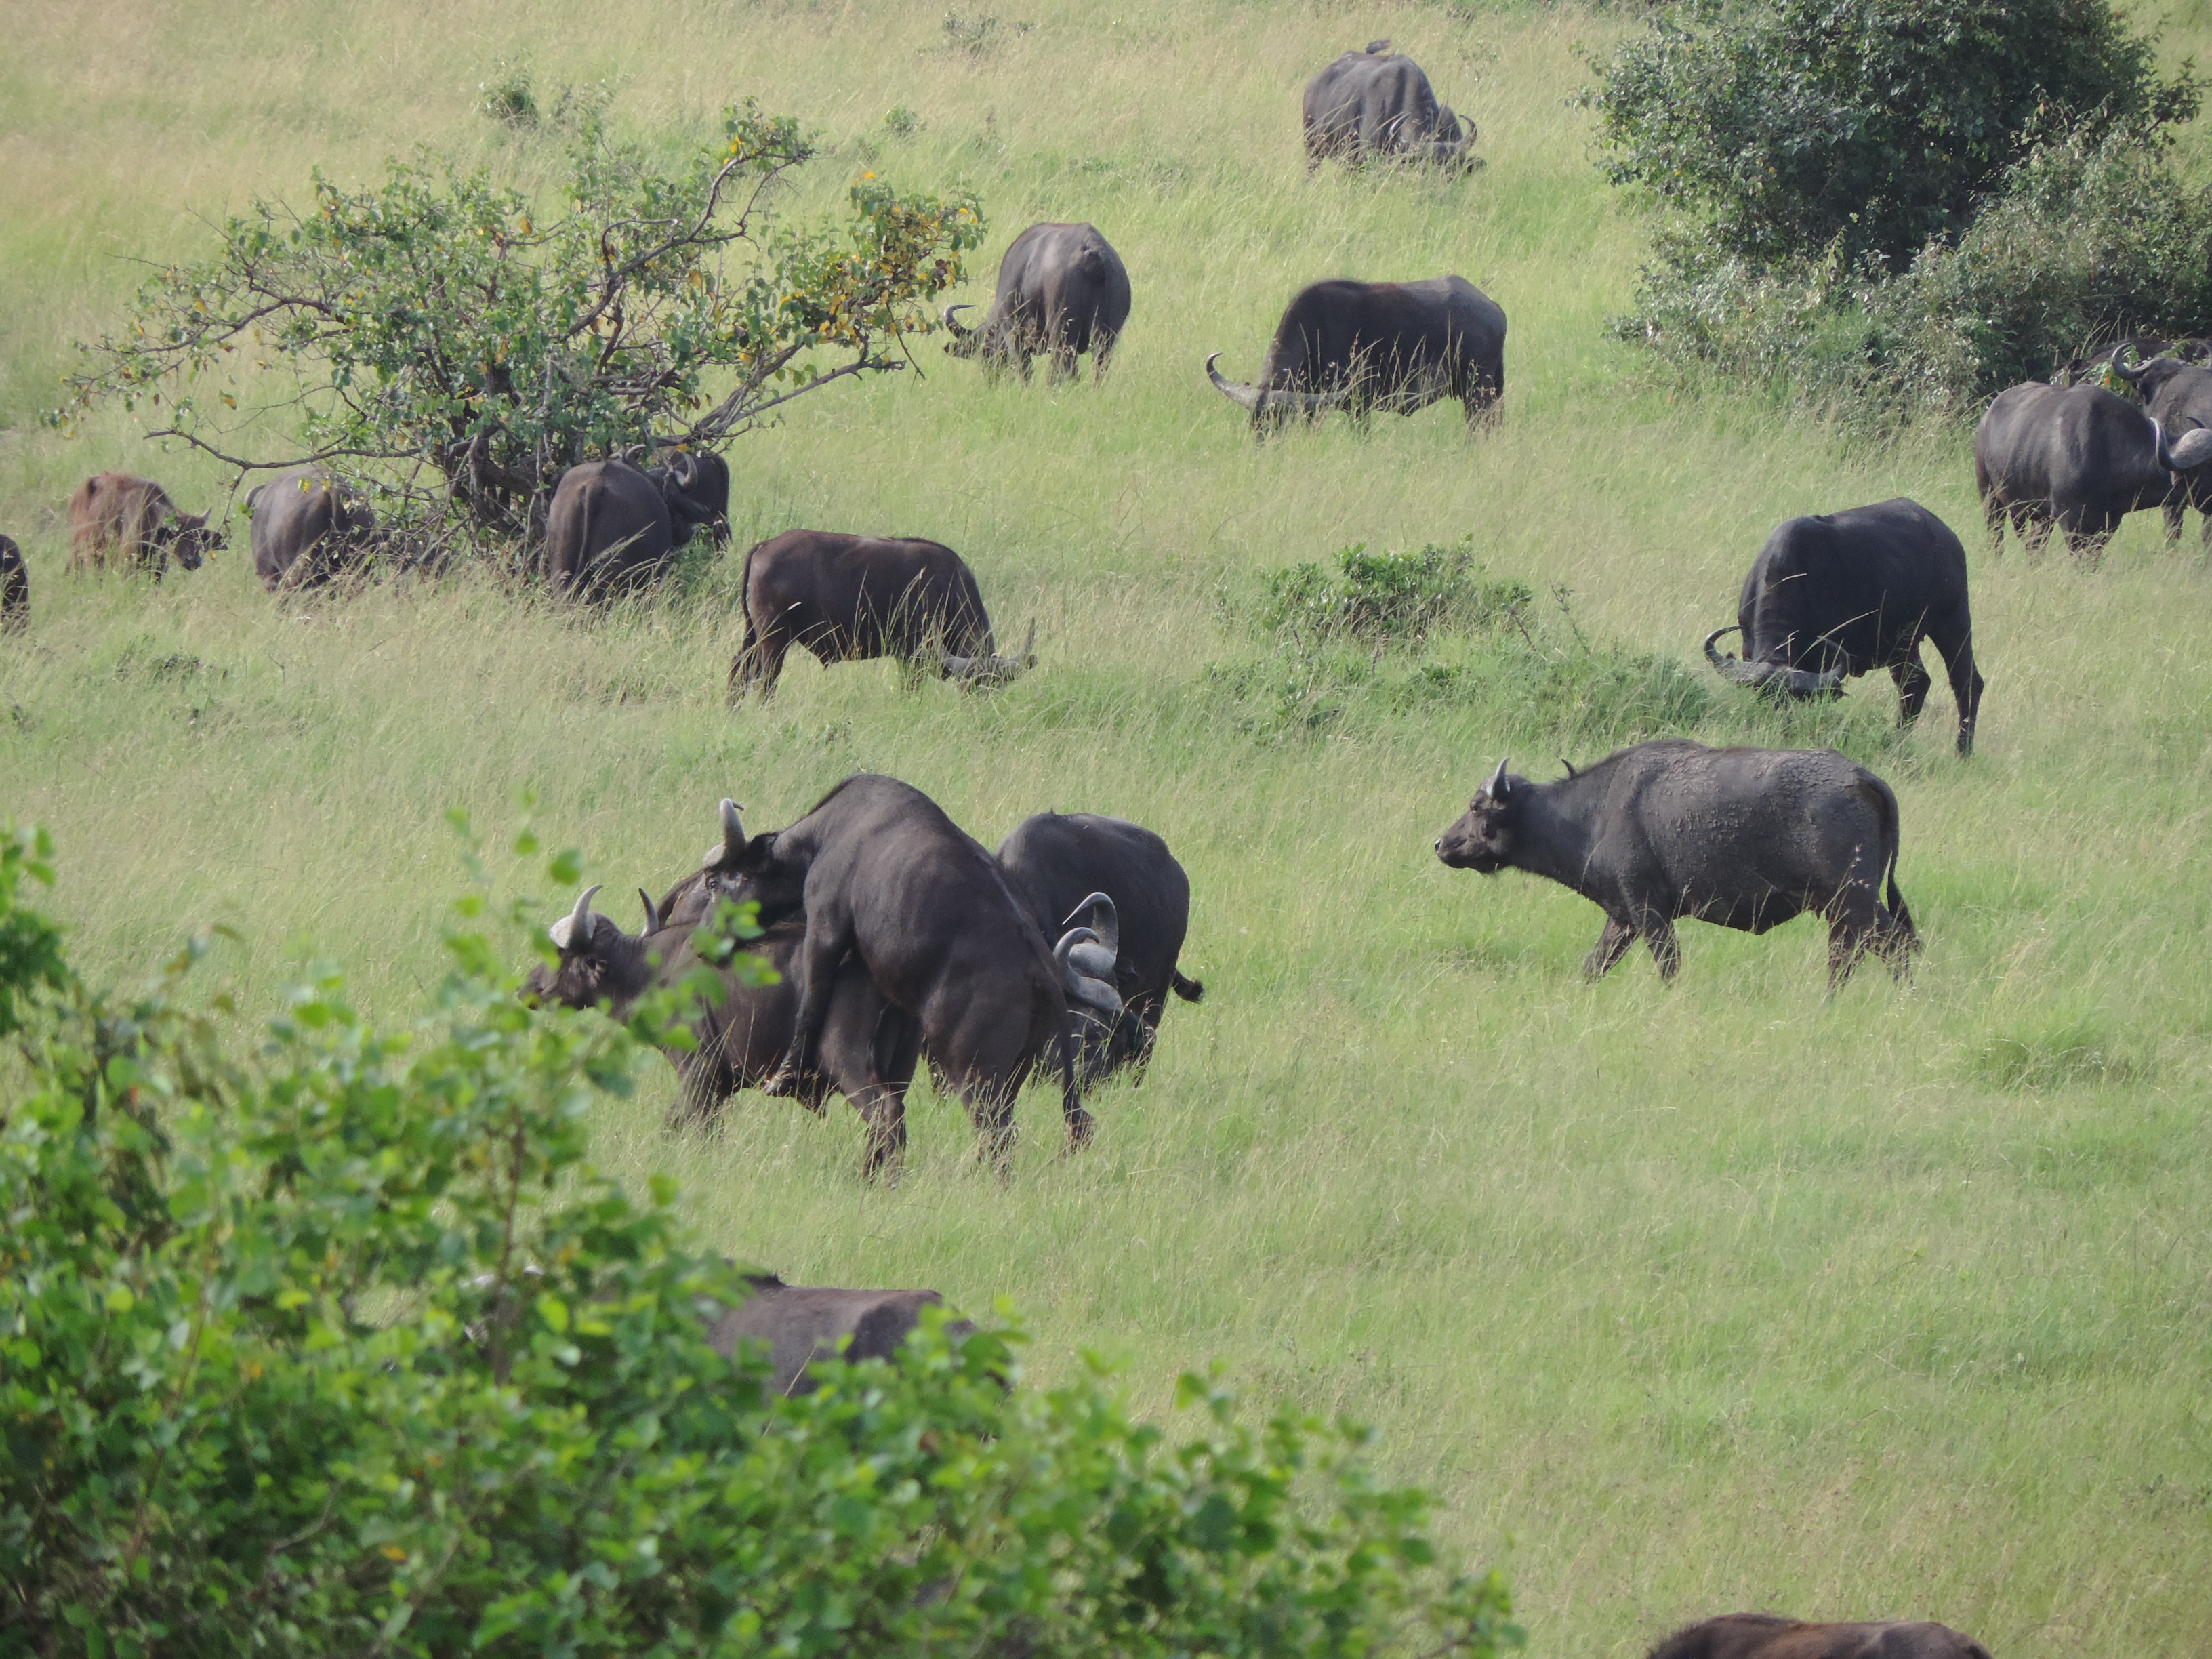 The Big Five Safari Bookings, YHA Kenya Travel,Masai Mara Tours.